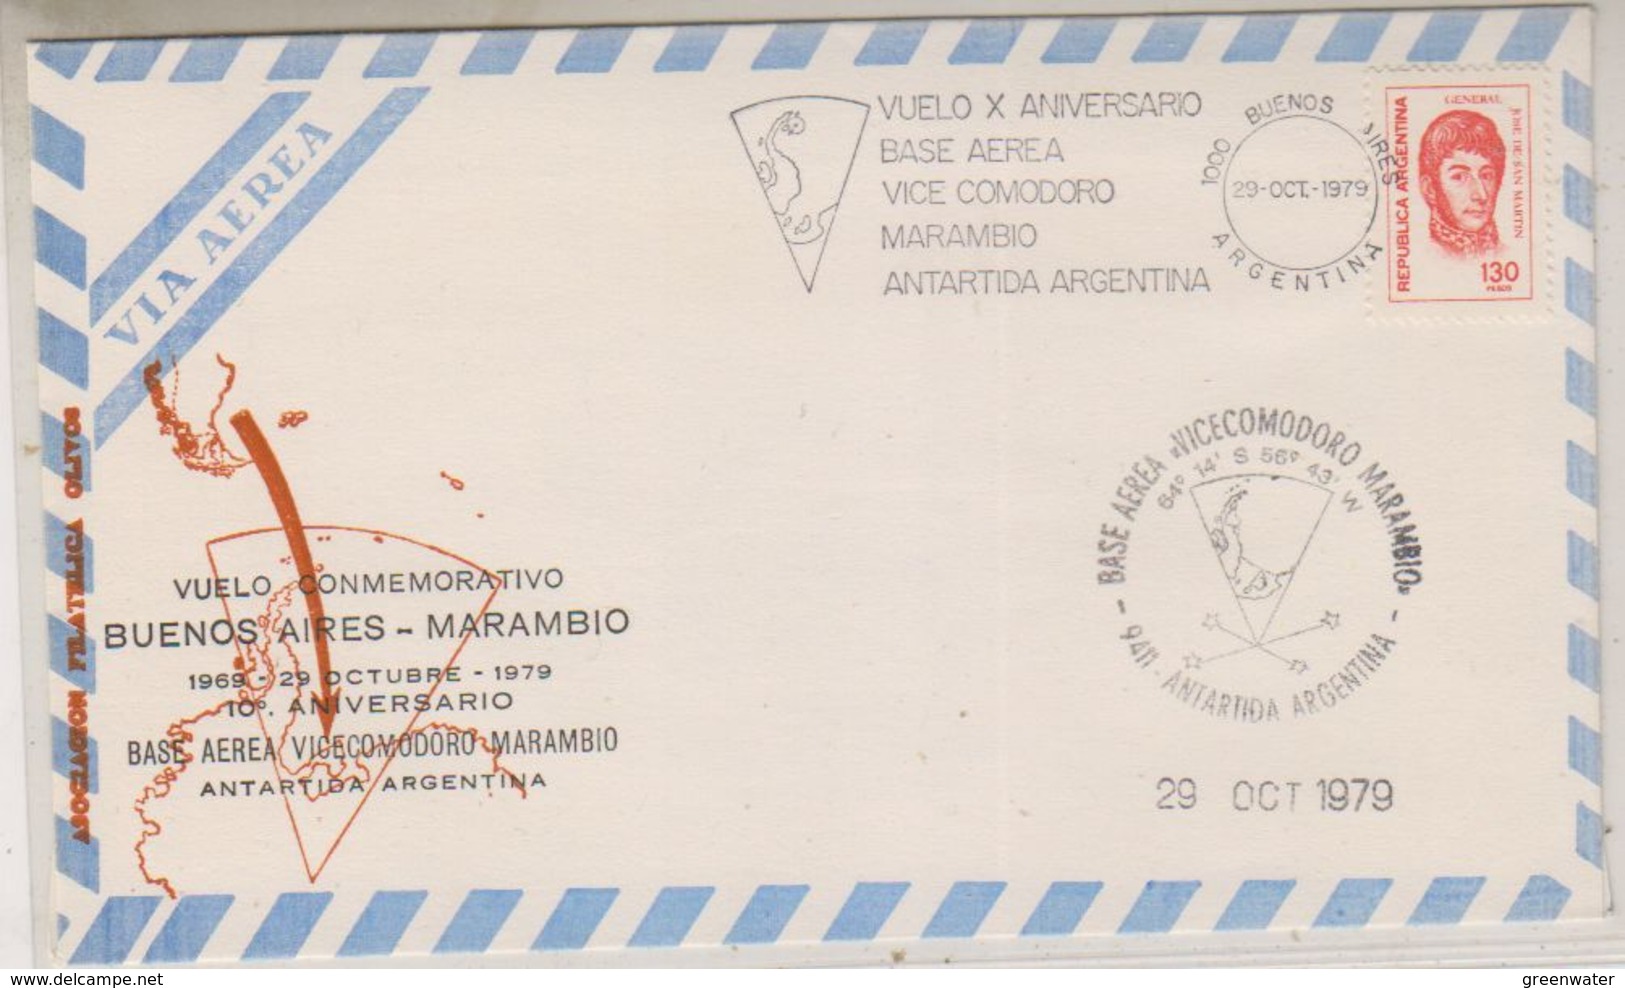 Argentina 1979 Vuelo Commemorativo Buenos Aires - Base Marambio 29 Oct 1979 Cover (38499) - Vuelos Polares